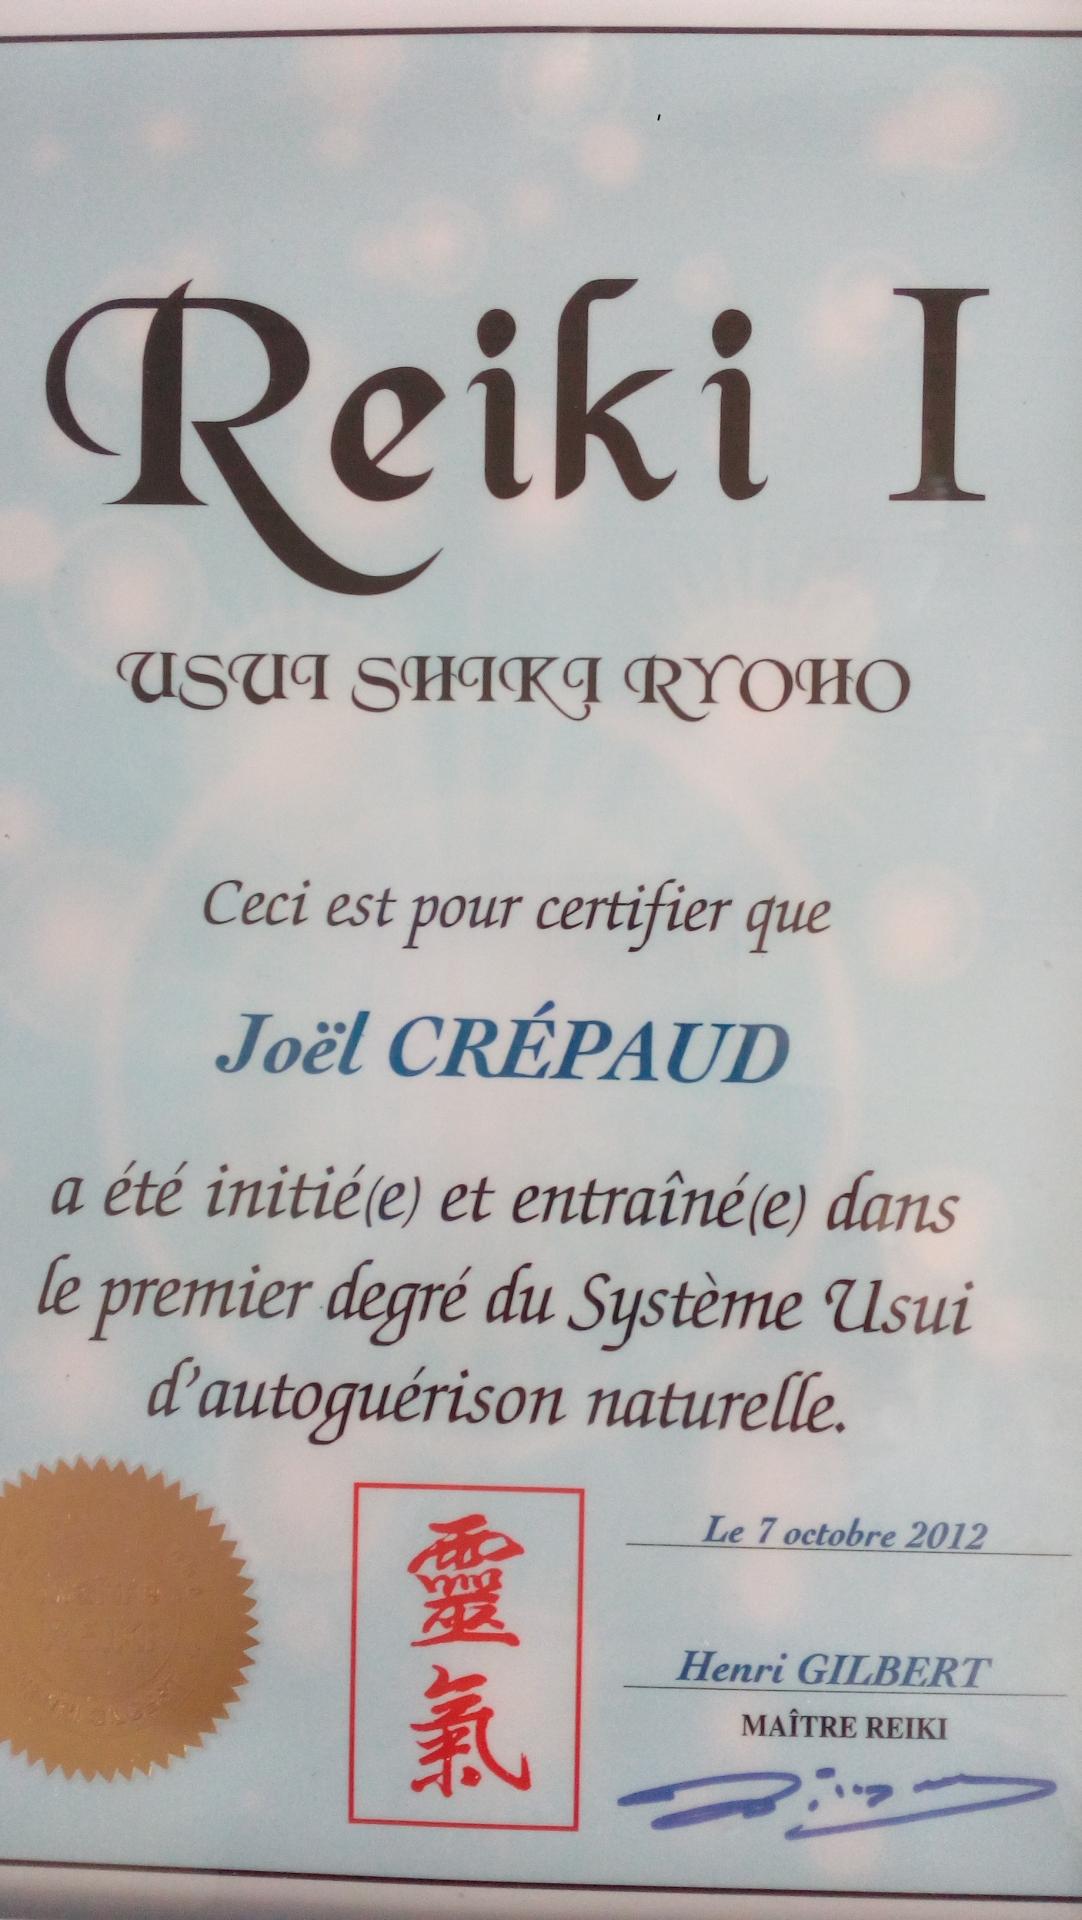 Certificat reiki i r